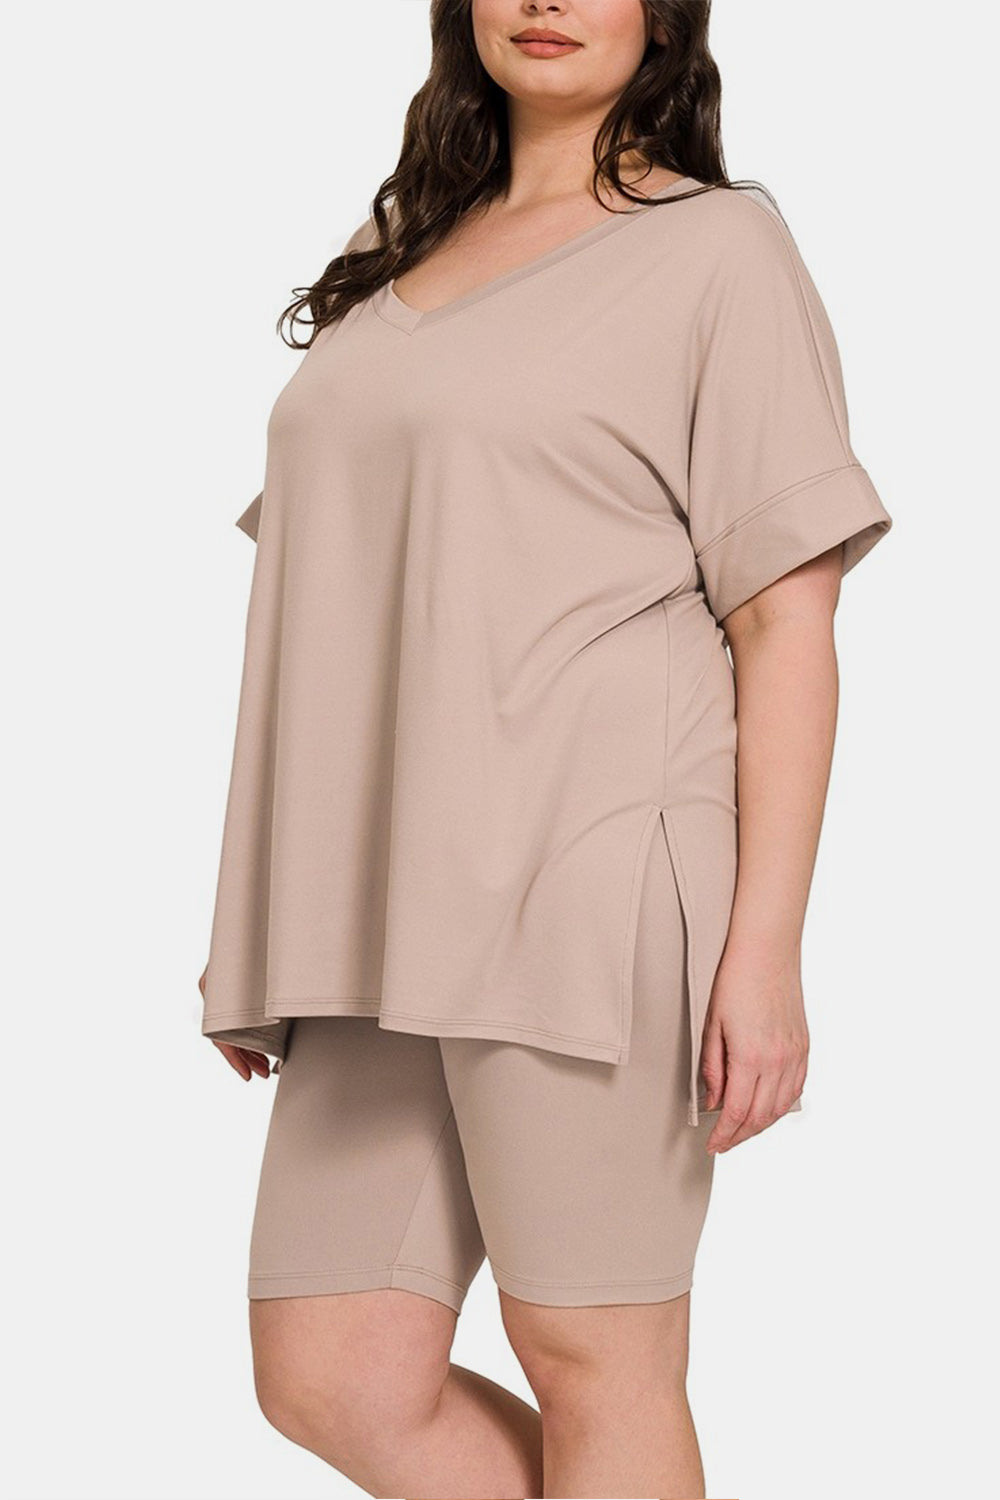 Zenana Full Size V-Neck Short Sleeve Slit T-Shirt and Shorts Set - Tigbul's Variety Fashion Shop